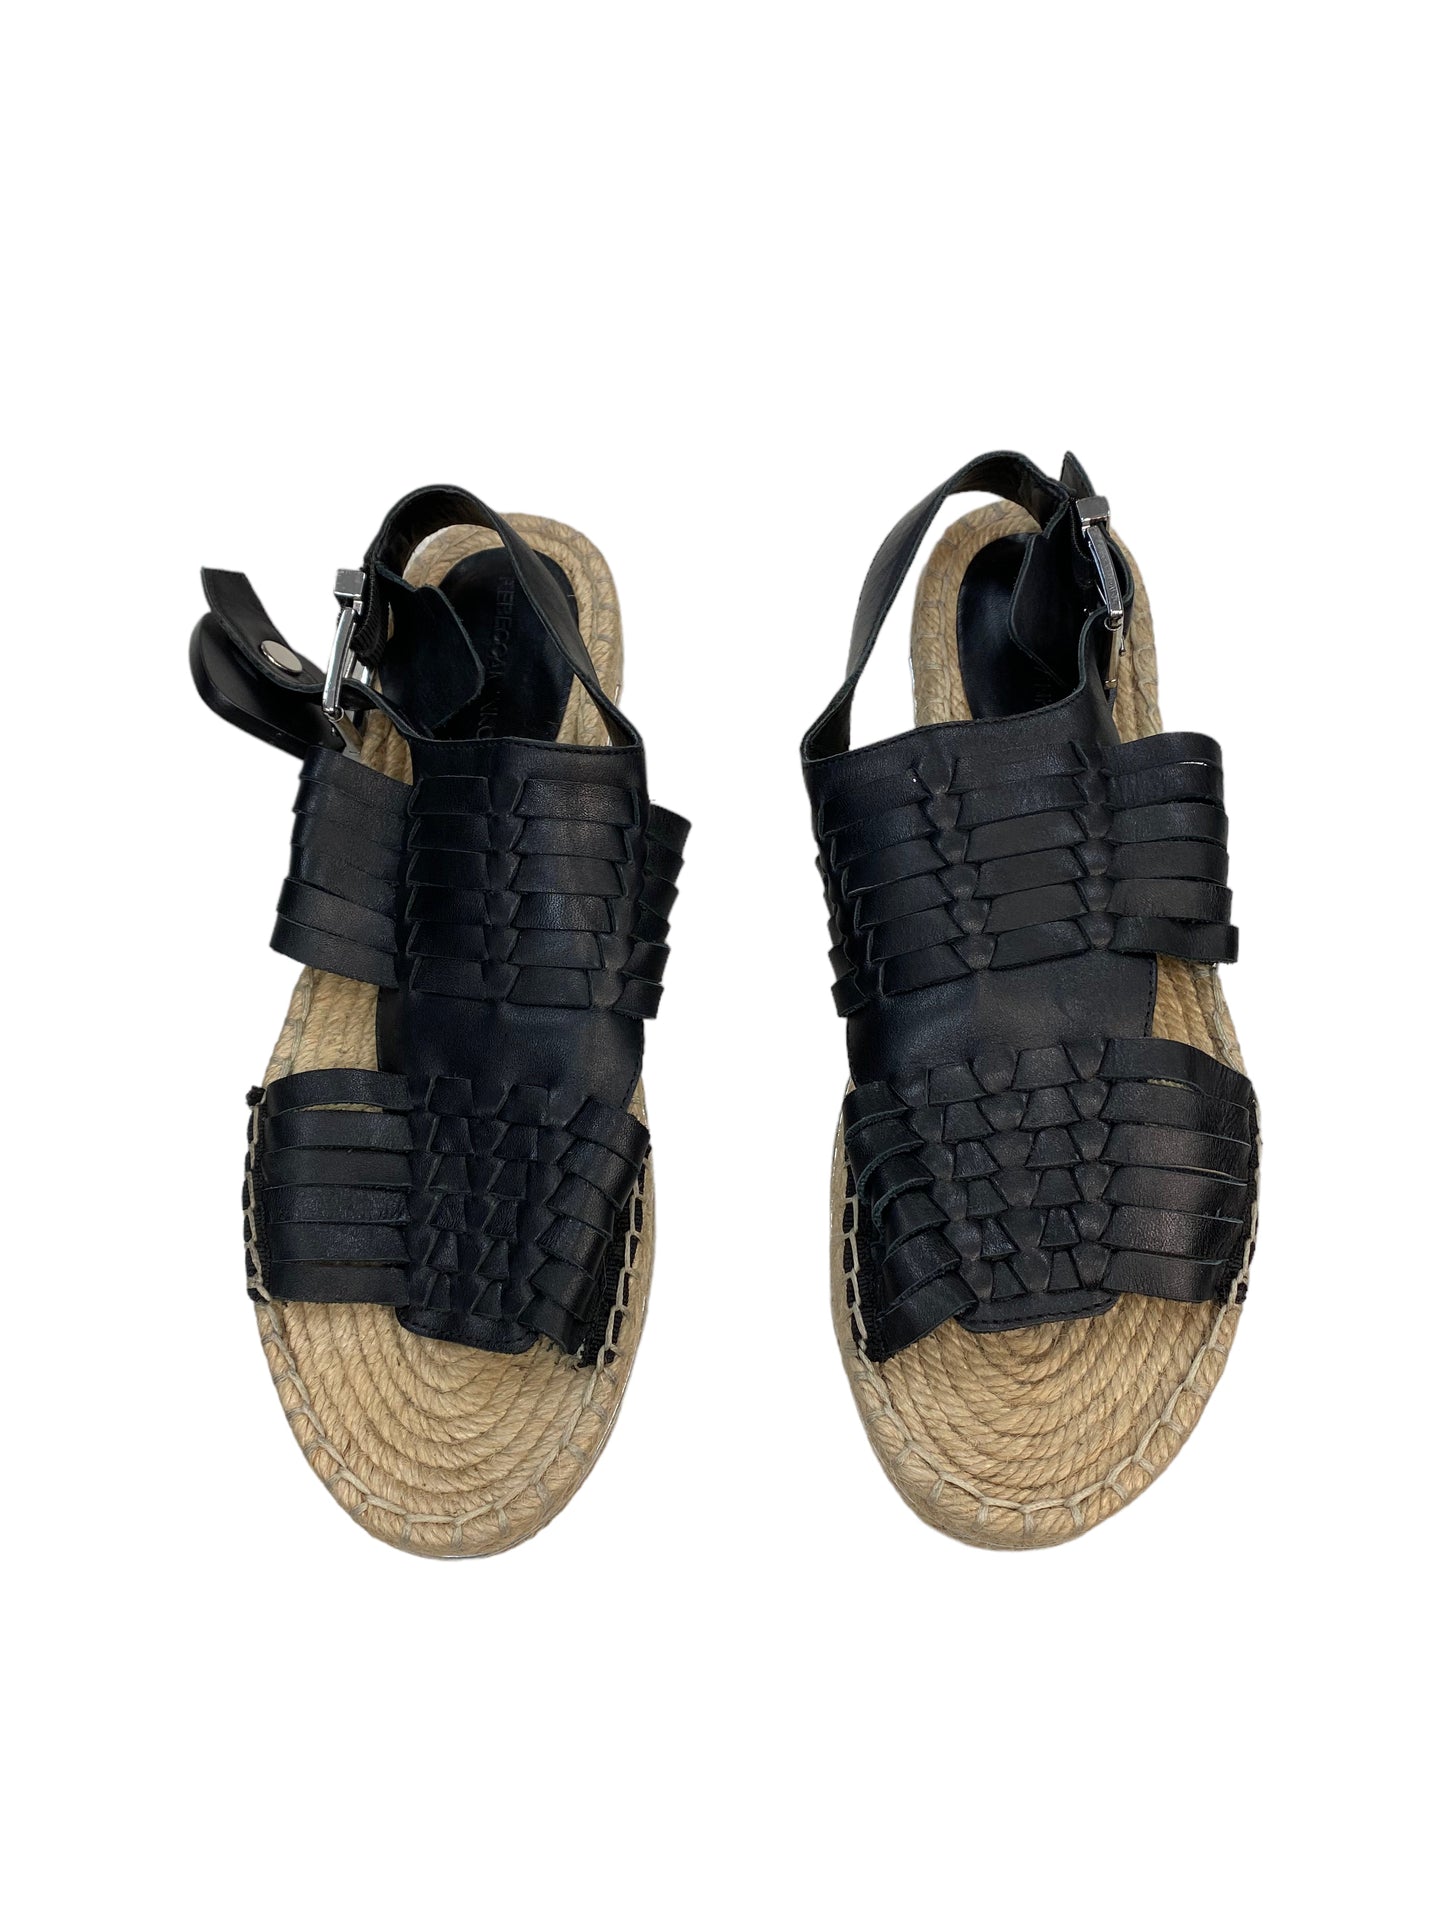 Black Sandals Designer Rebecca Minkoff, Size 8